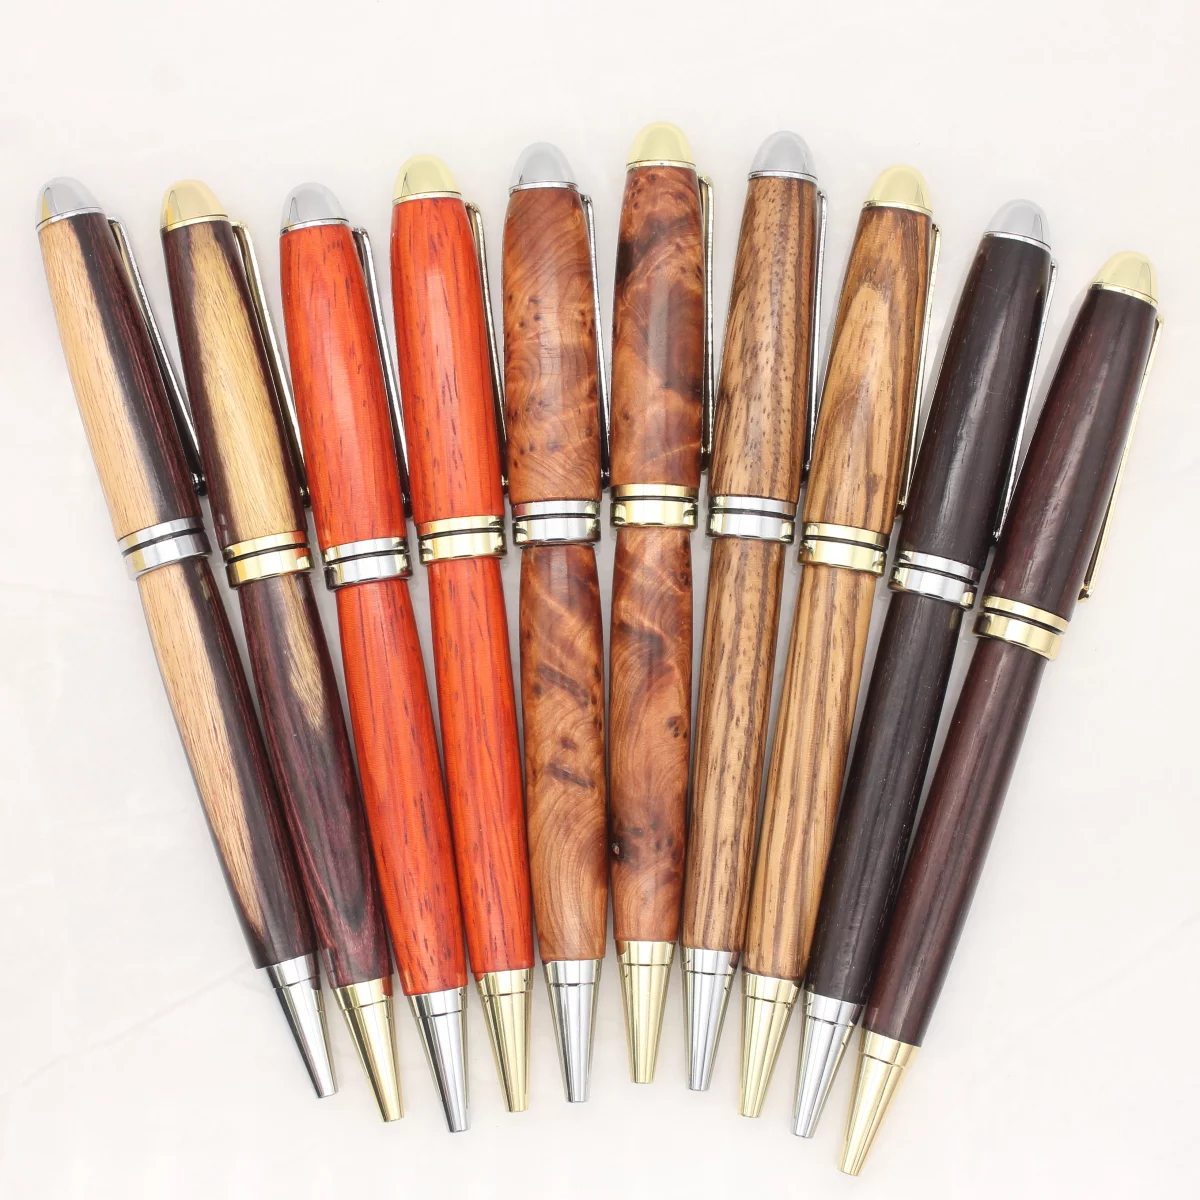 Euro style wood pen - The Market Co